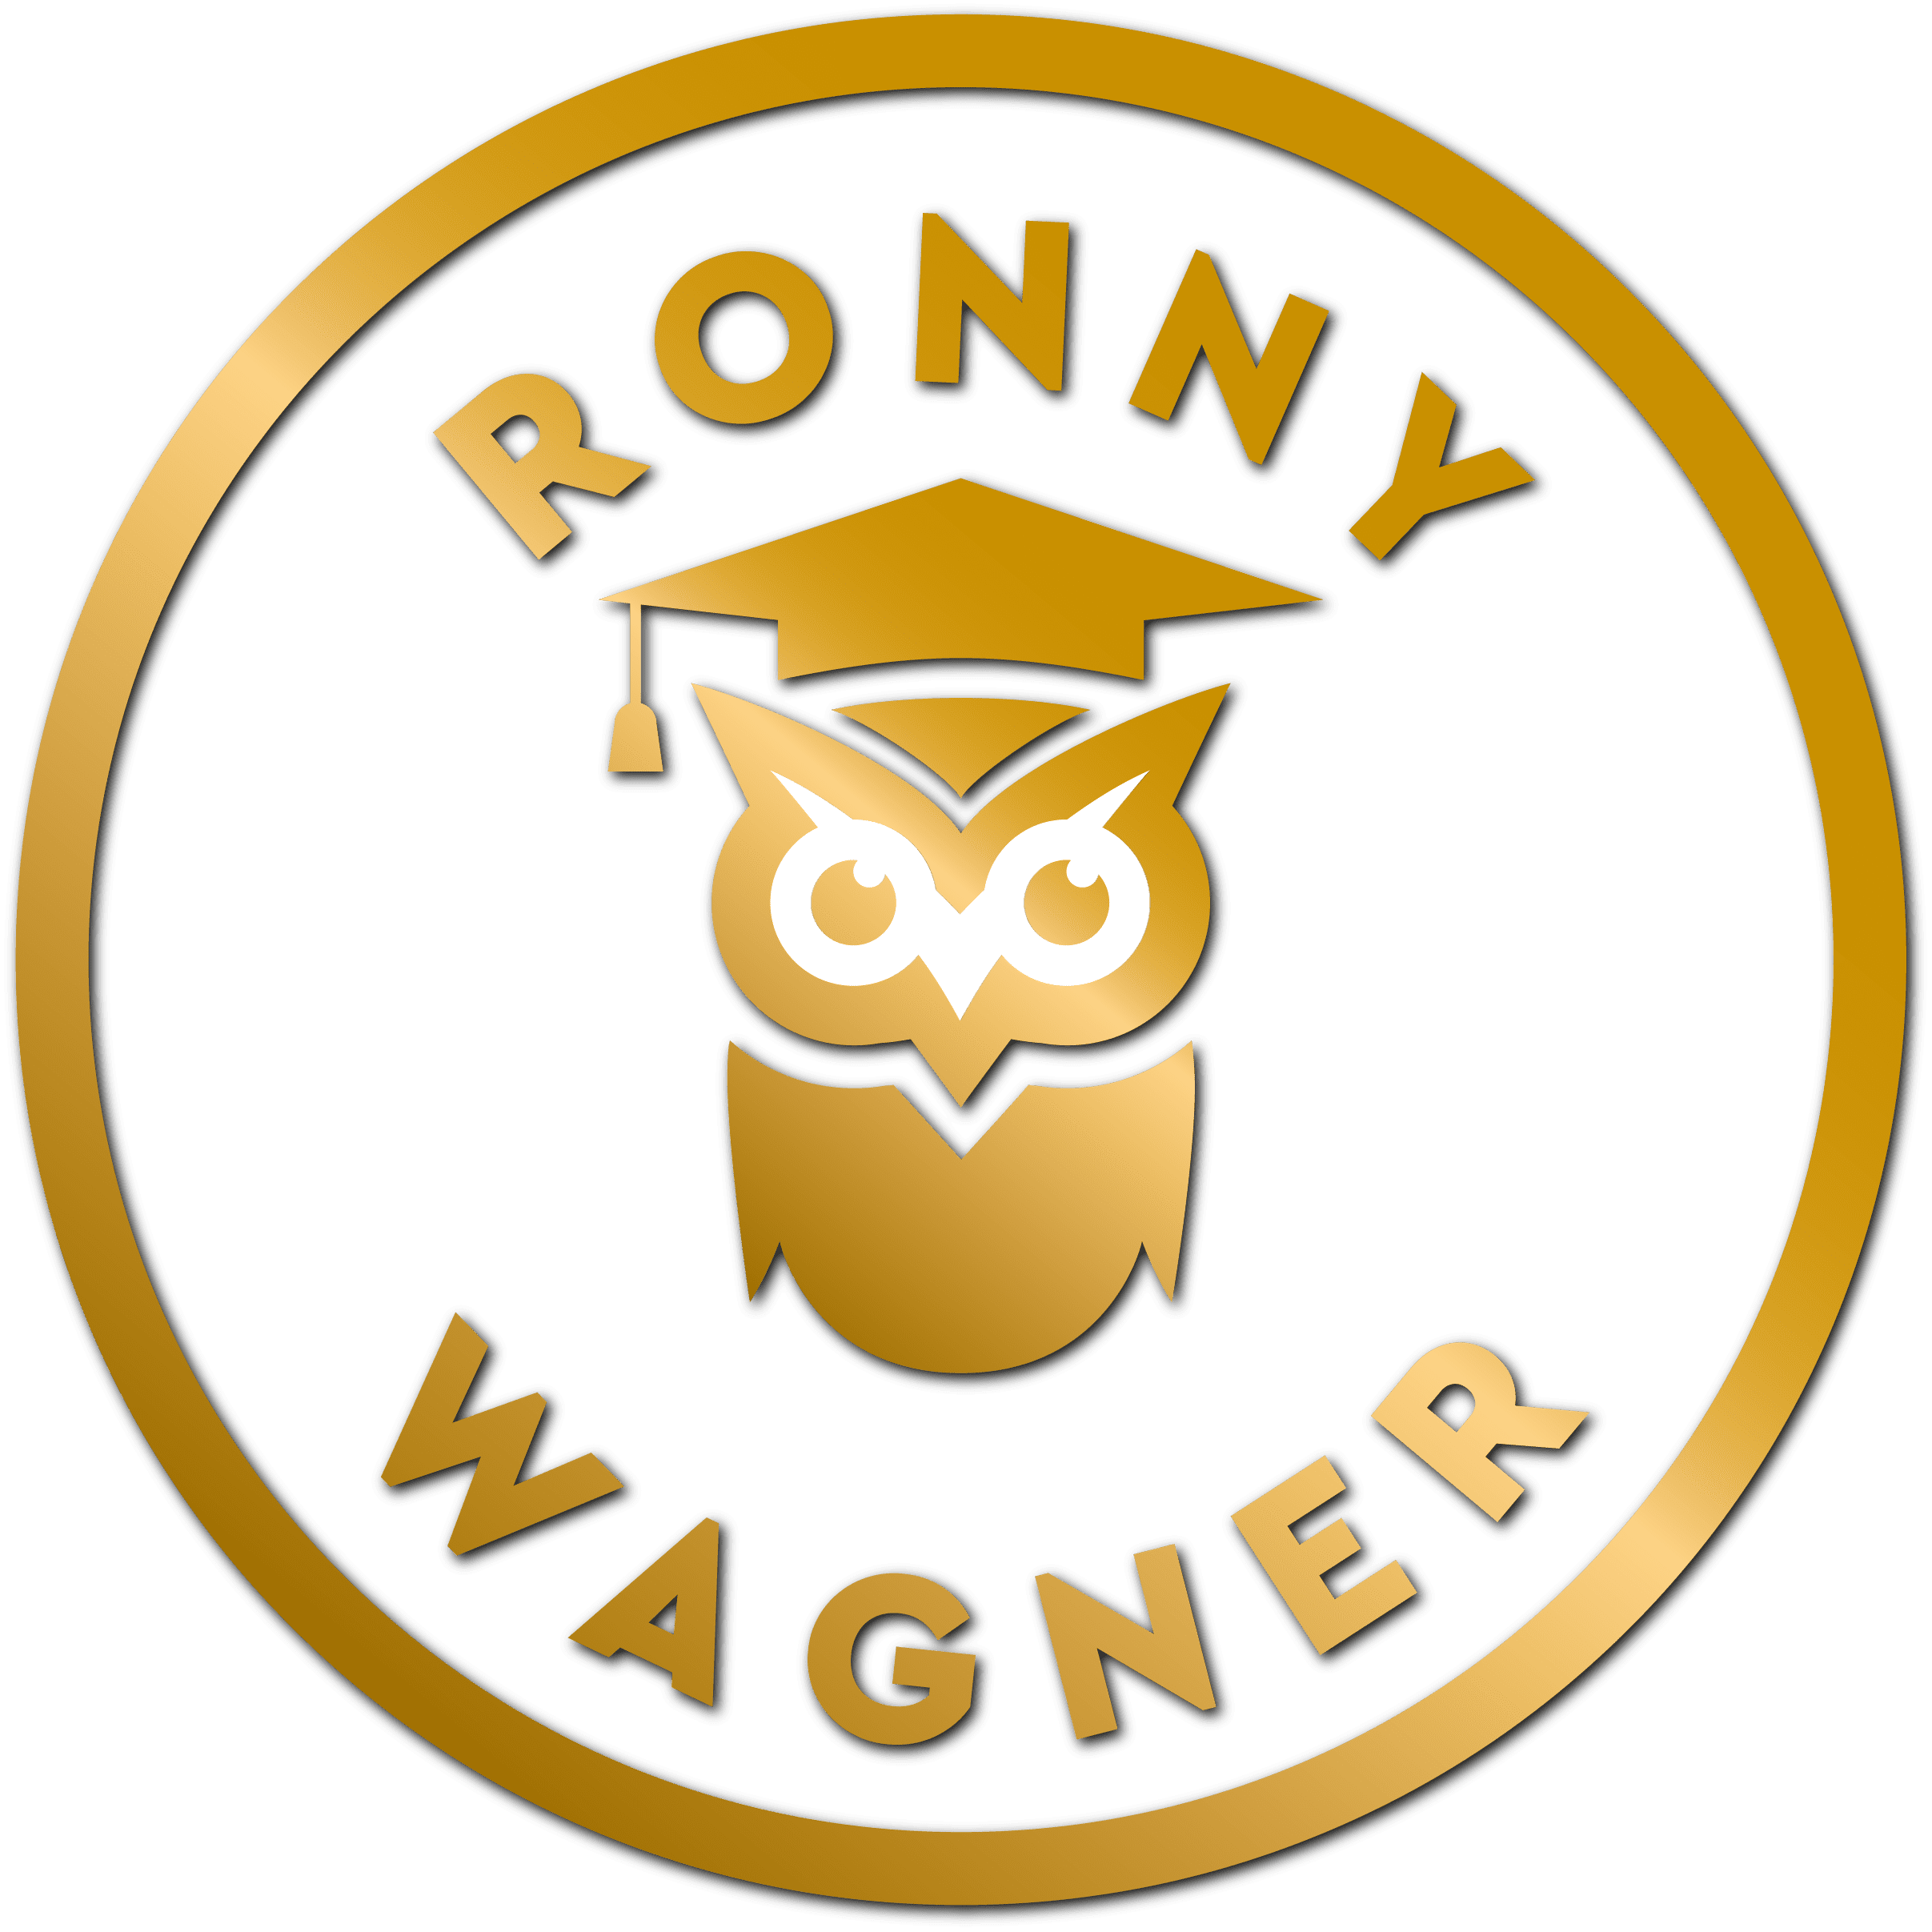 Ronny Wagner